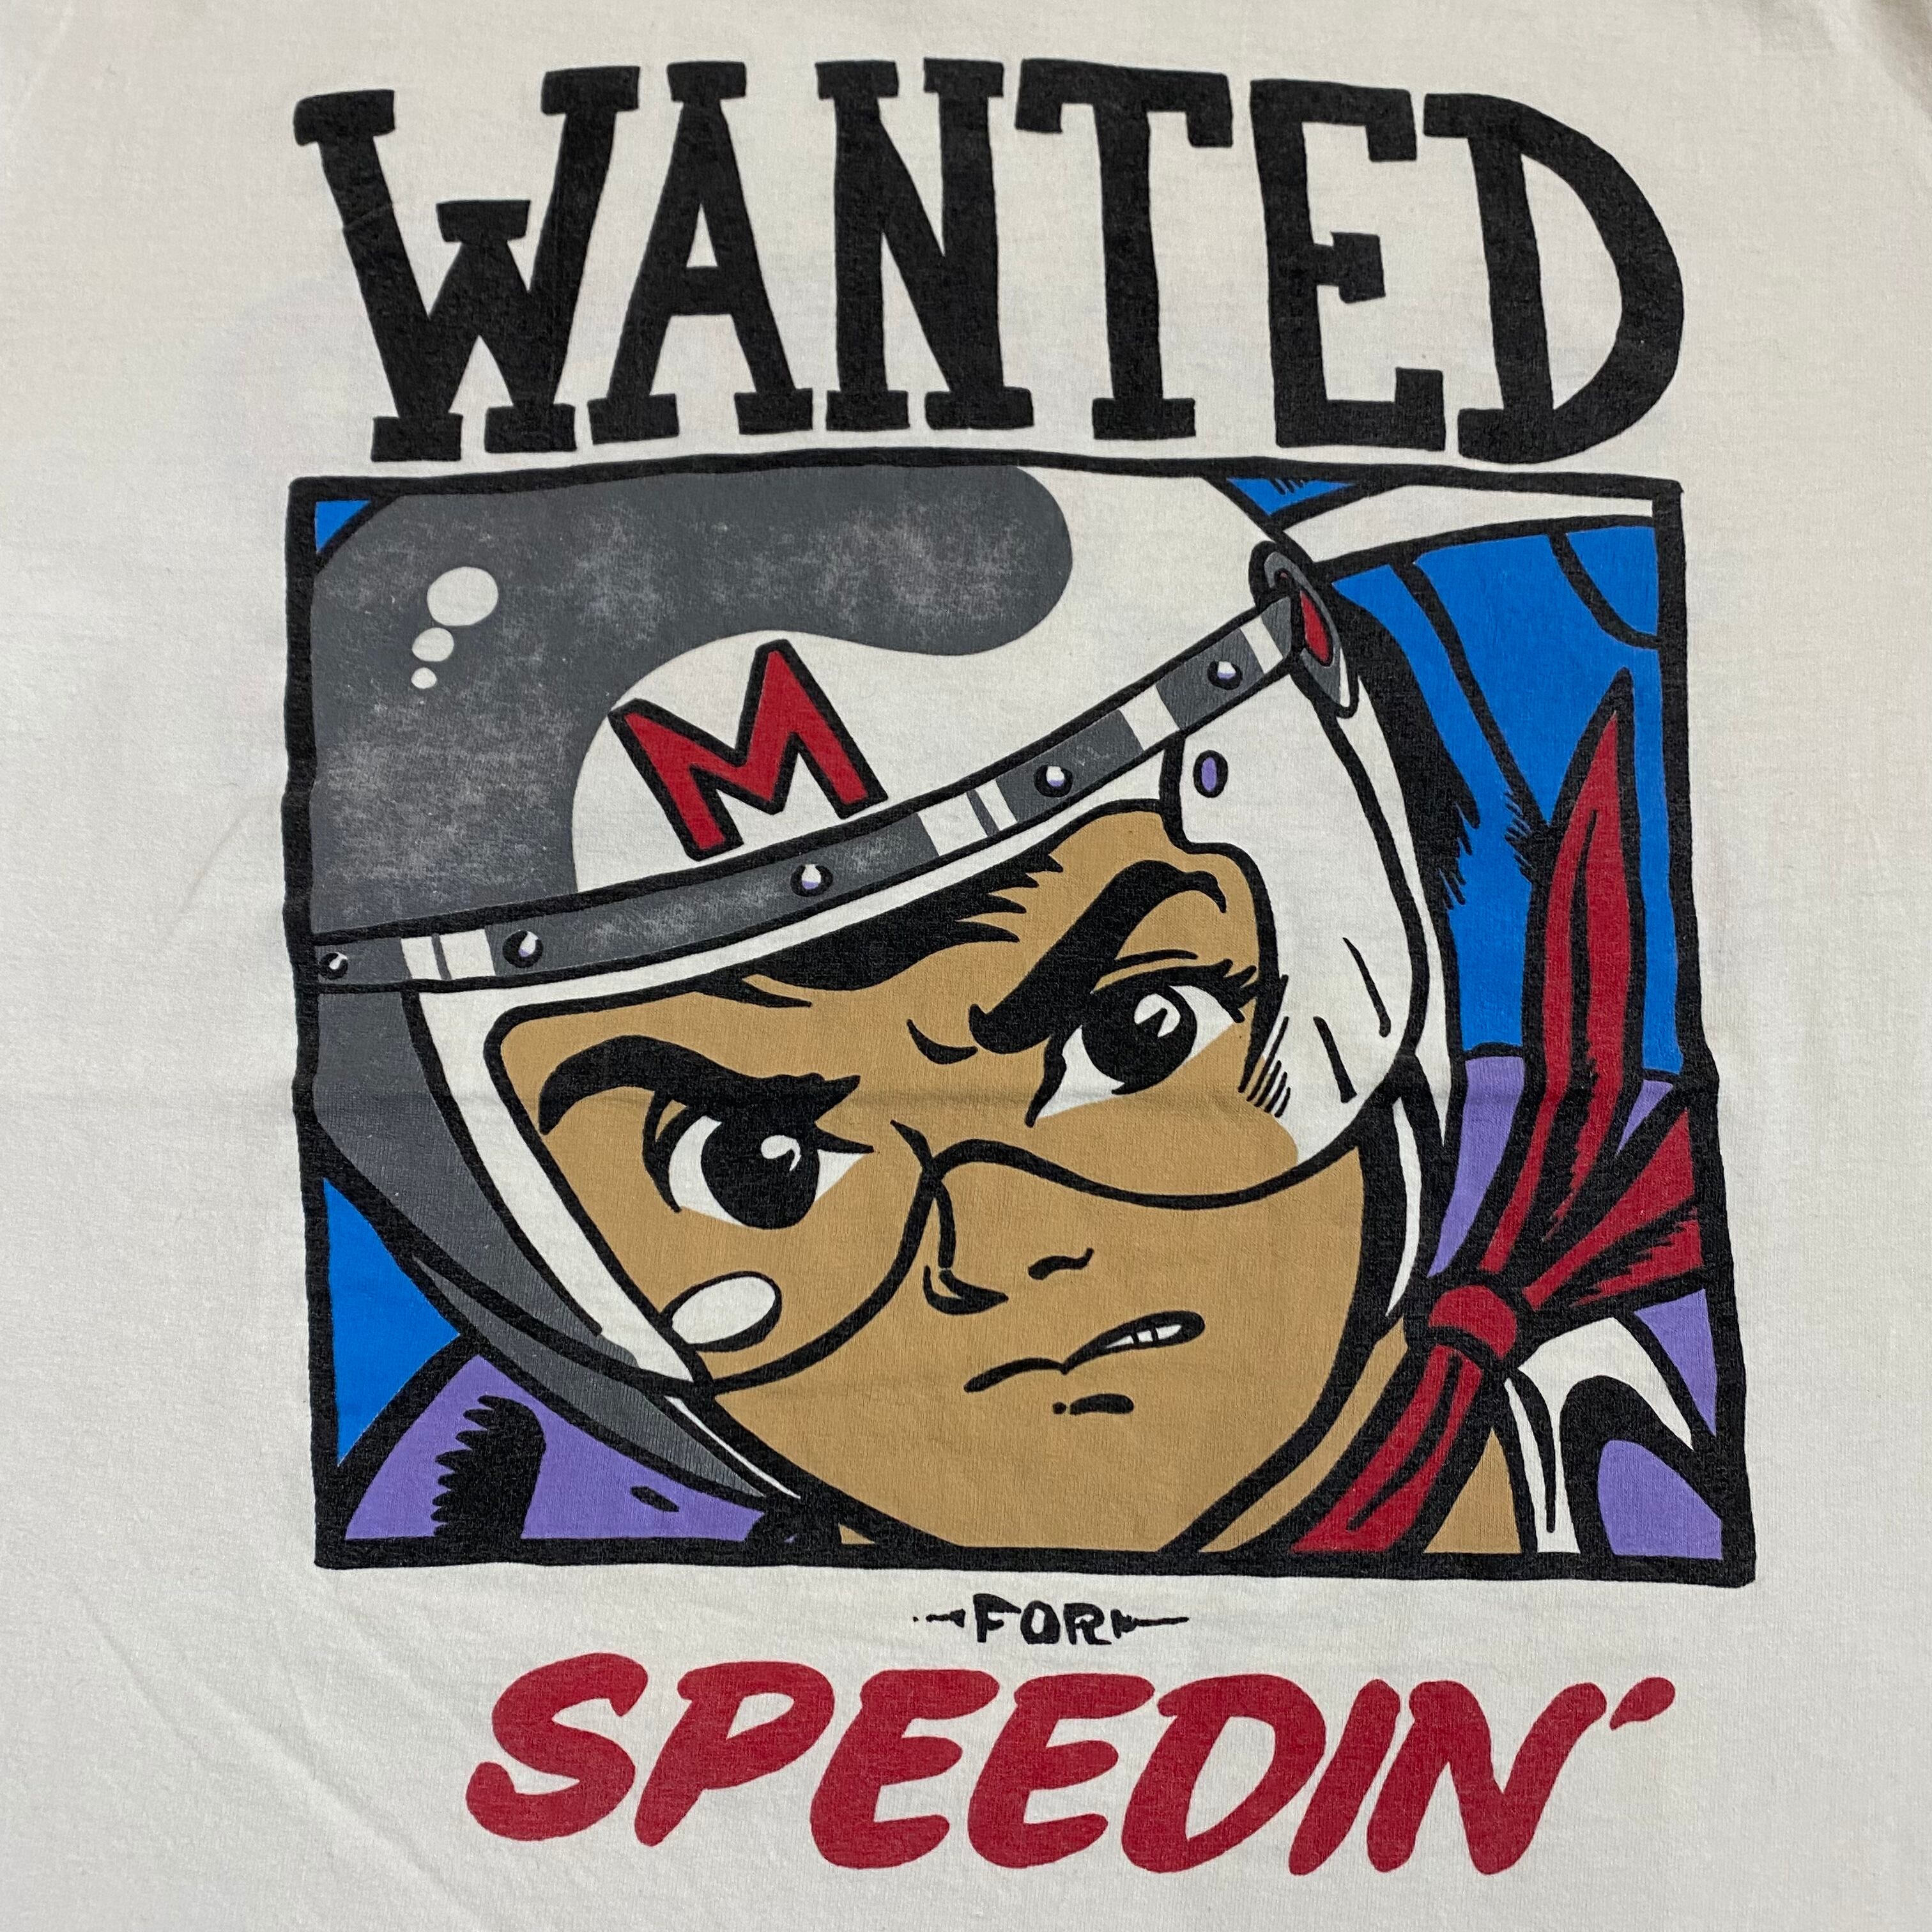 90s SPEED RACER マッハGoGoGo アニメTシャツ